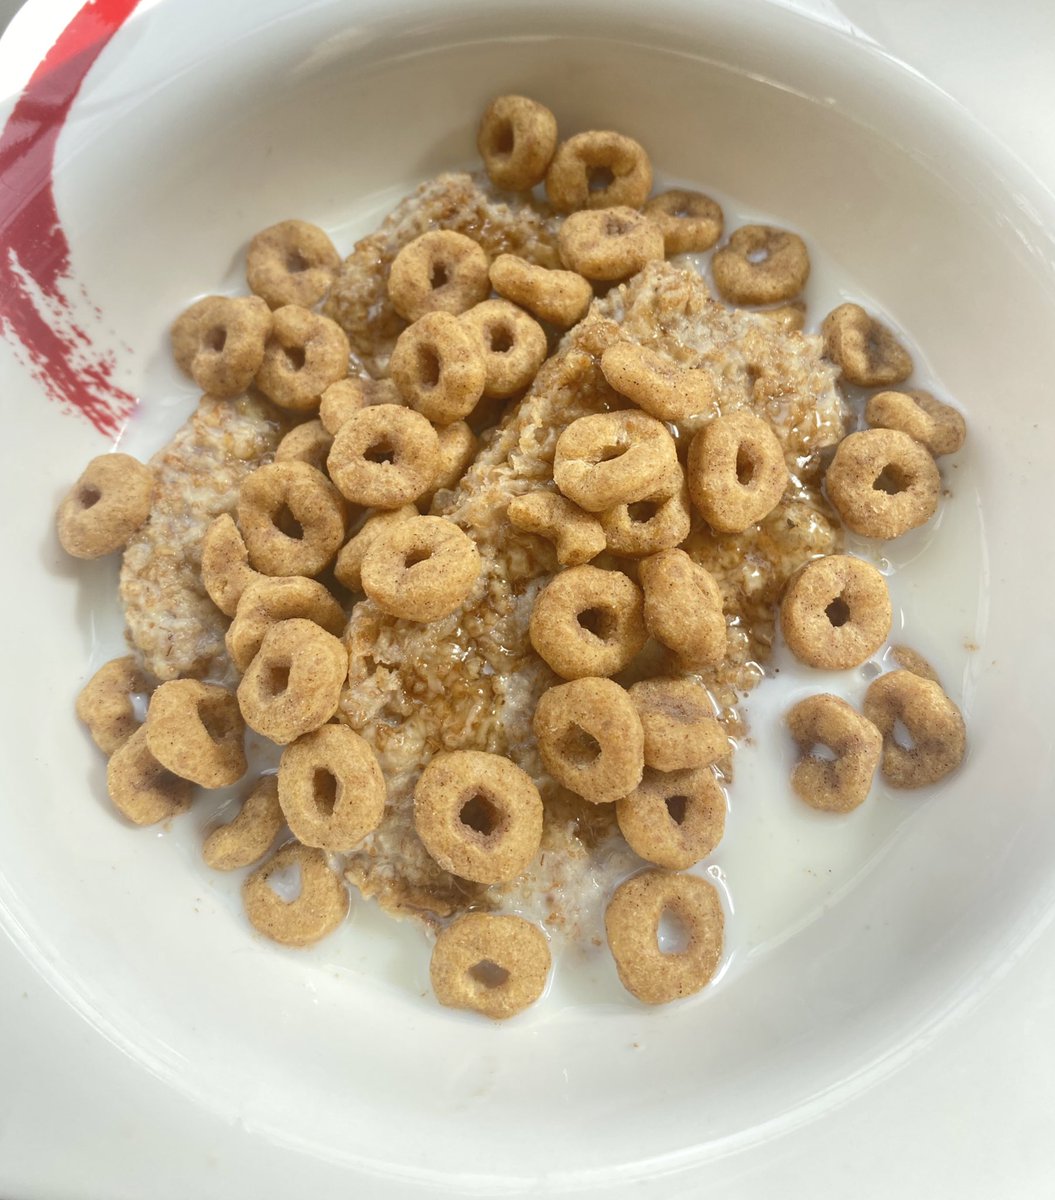 Banana Weetabix with cinnamon cereal!! The milk tastes fucking insane 😭
-
Info in alt